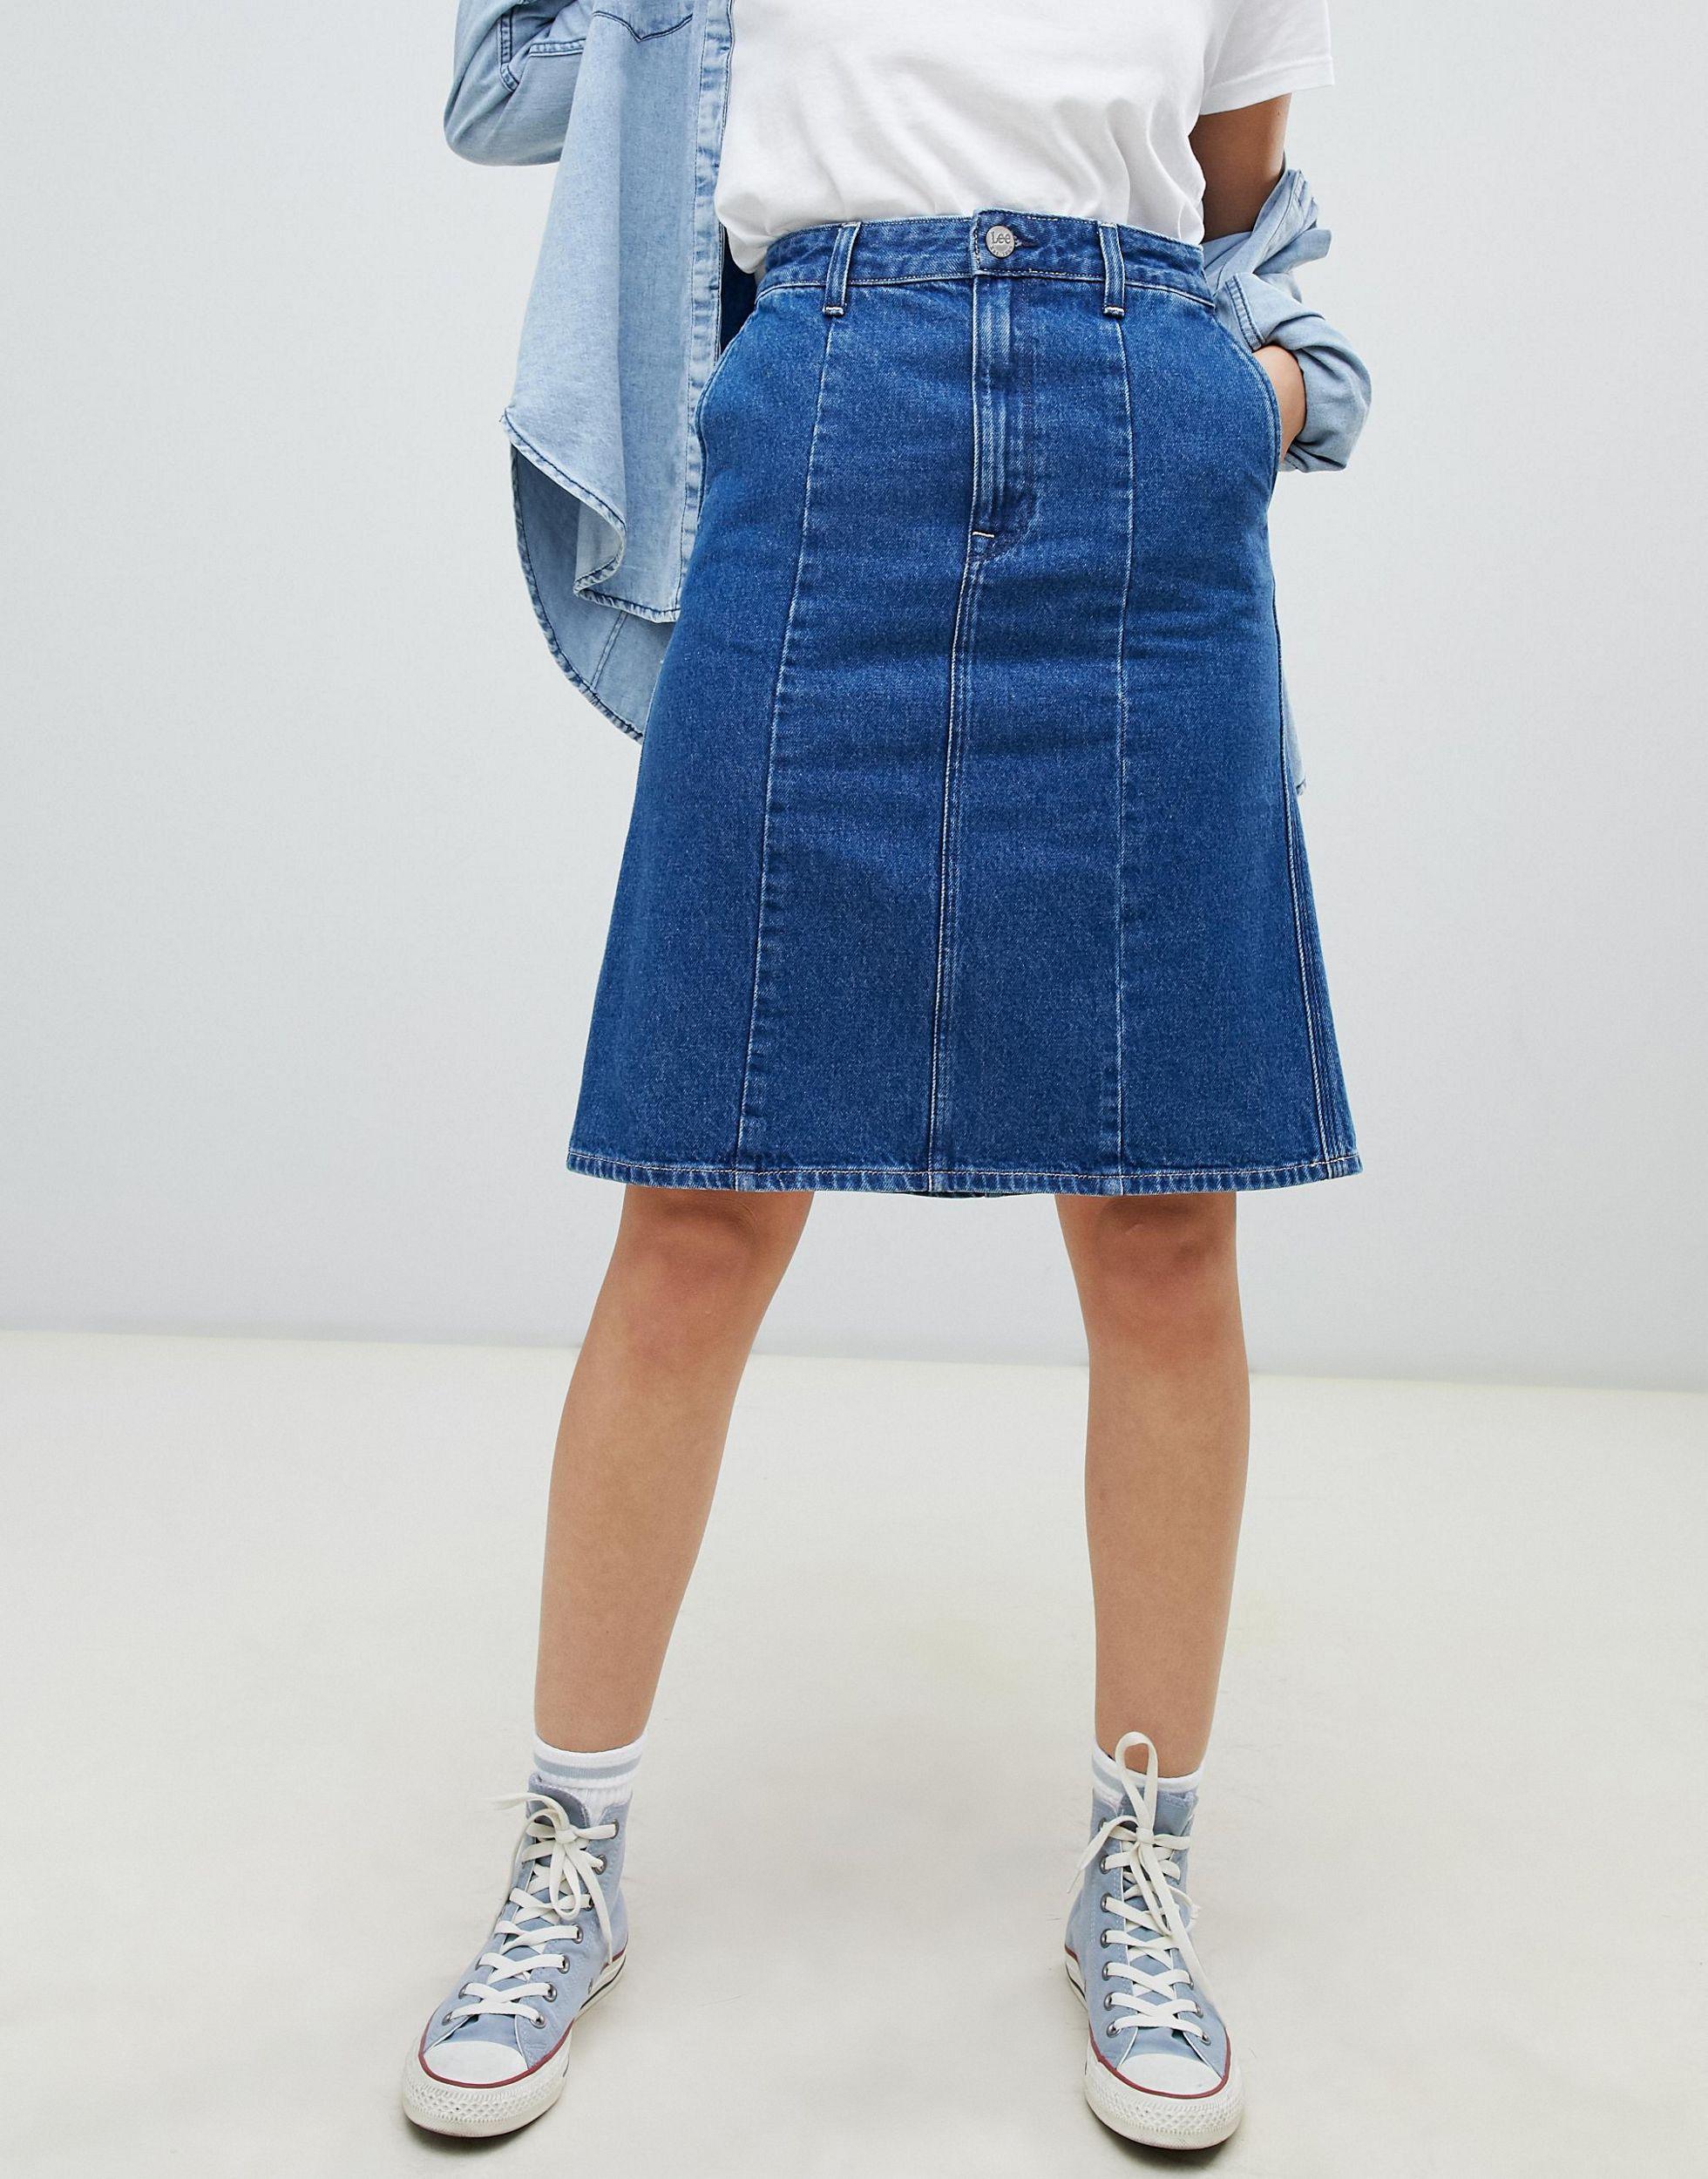 Lee Jeans A-line Denim Skirt in |